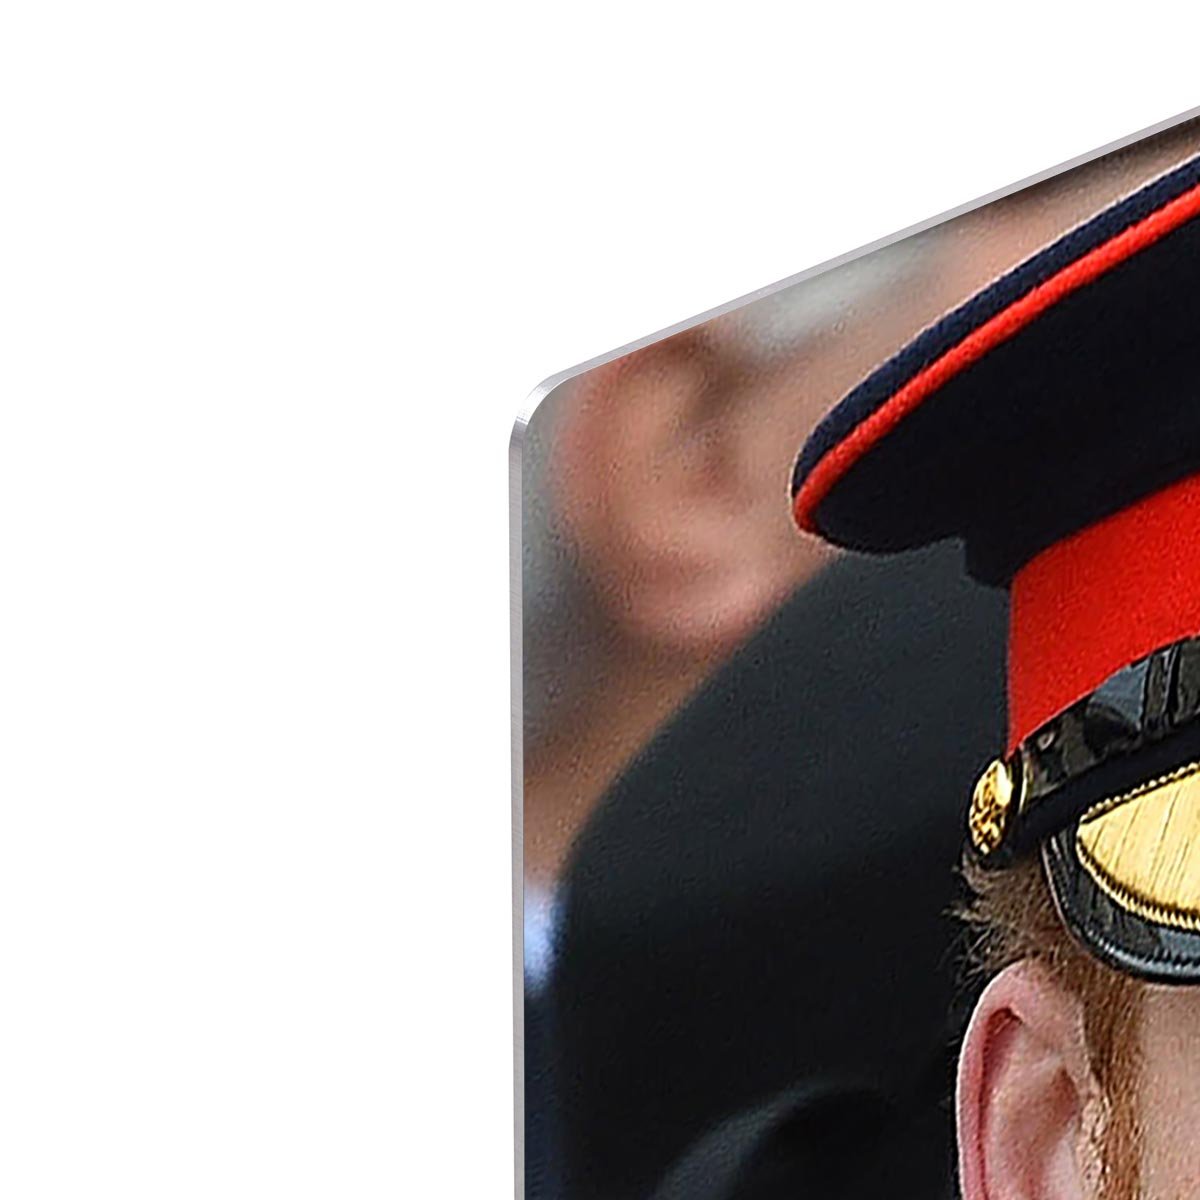 Prince Harry in uniform during ceremonies in Staffordshire HD Metal Print